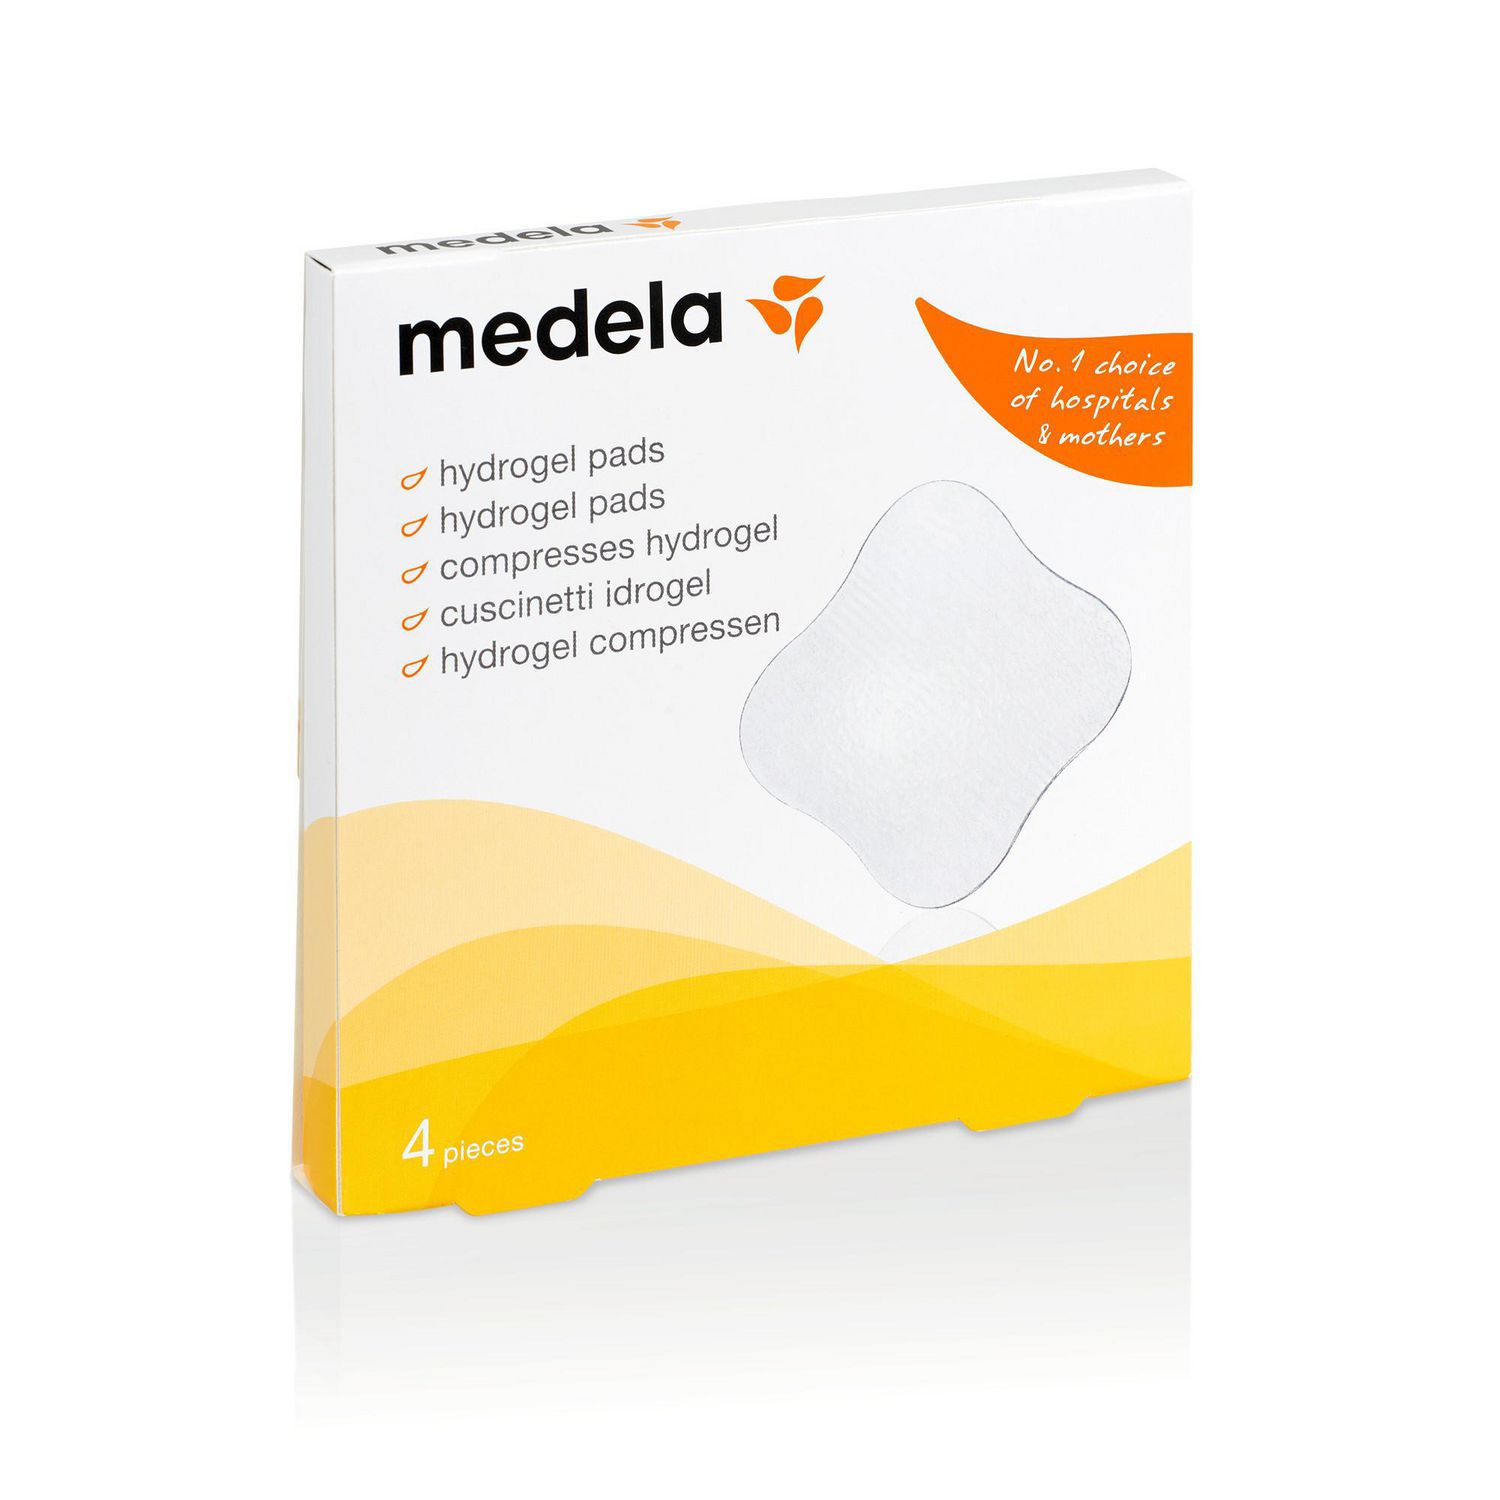 Medela Tender Care Hydrogel Pads For Maternity/Breastfeeding